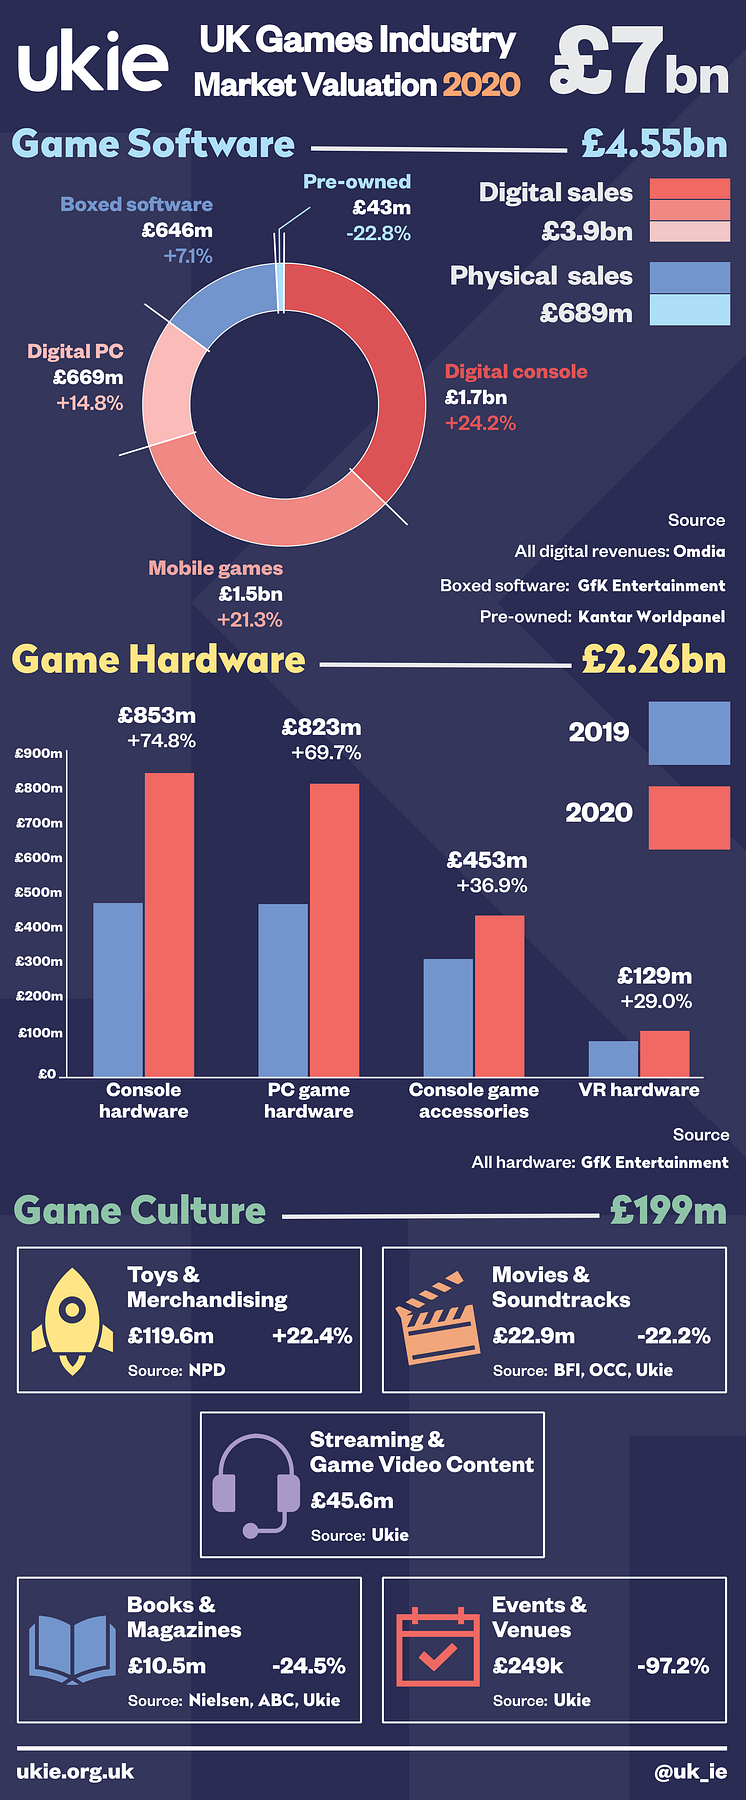 Ukie_UK_Games_Industry_Market_Valuation_2020.png